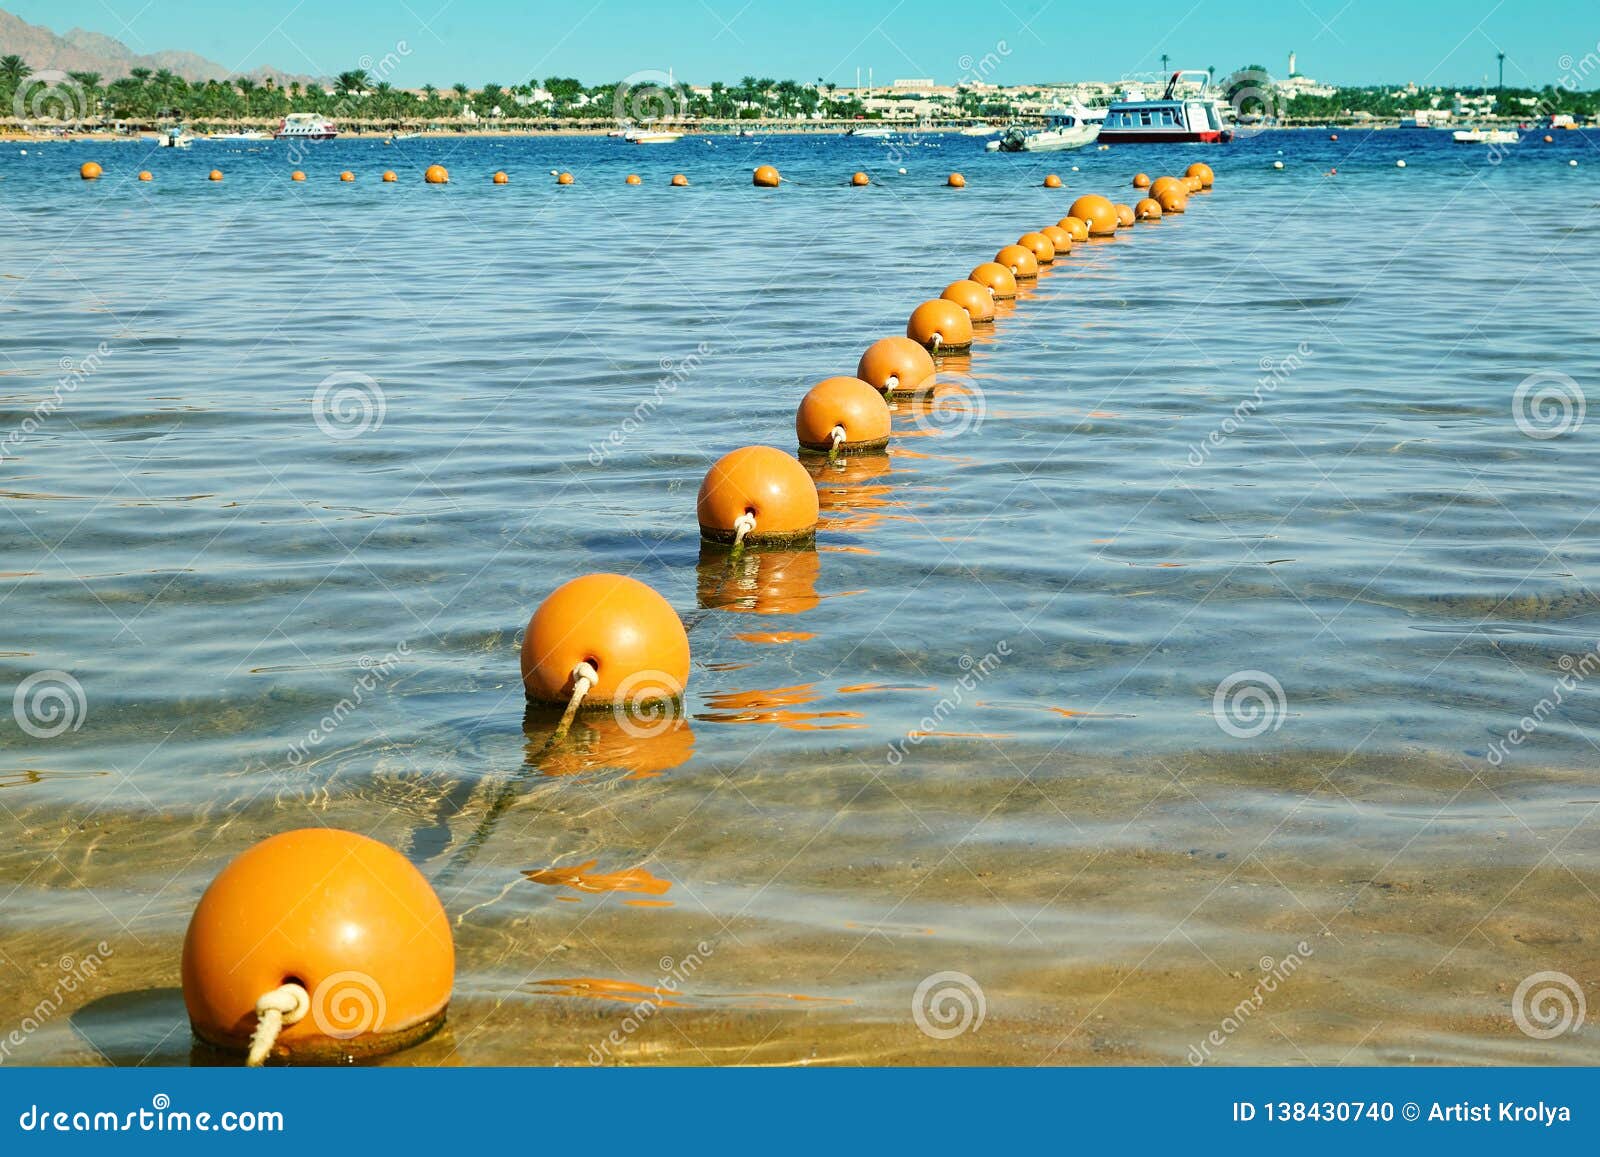 https://thumbs.dreamstime.com/z/buoys-sea-view-shore-long-line-orange-colored-marker-floating-138430740.jpg